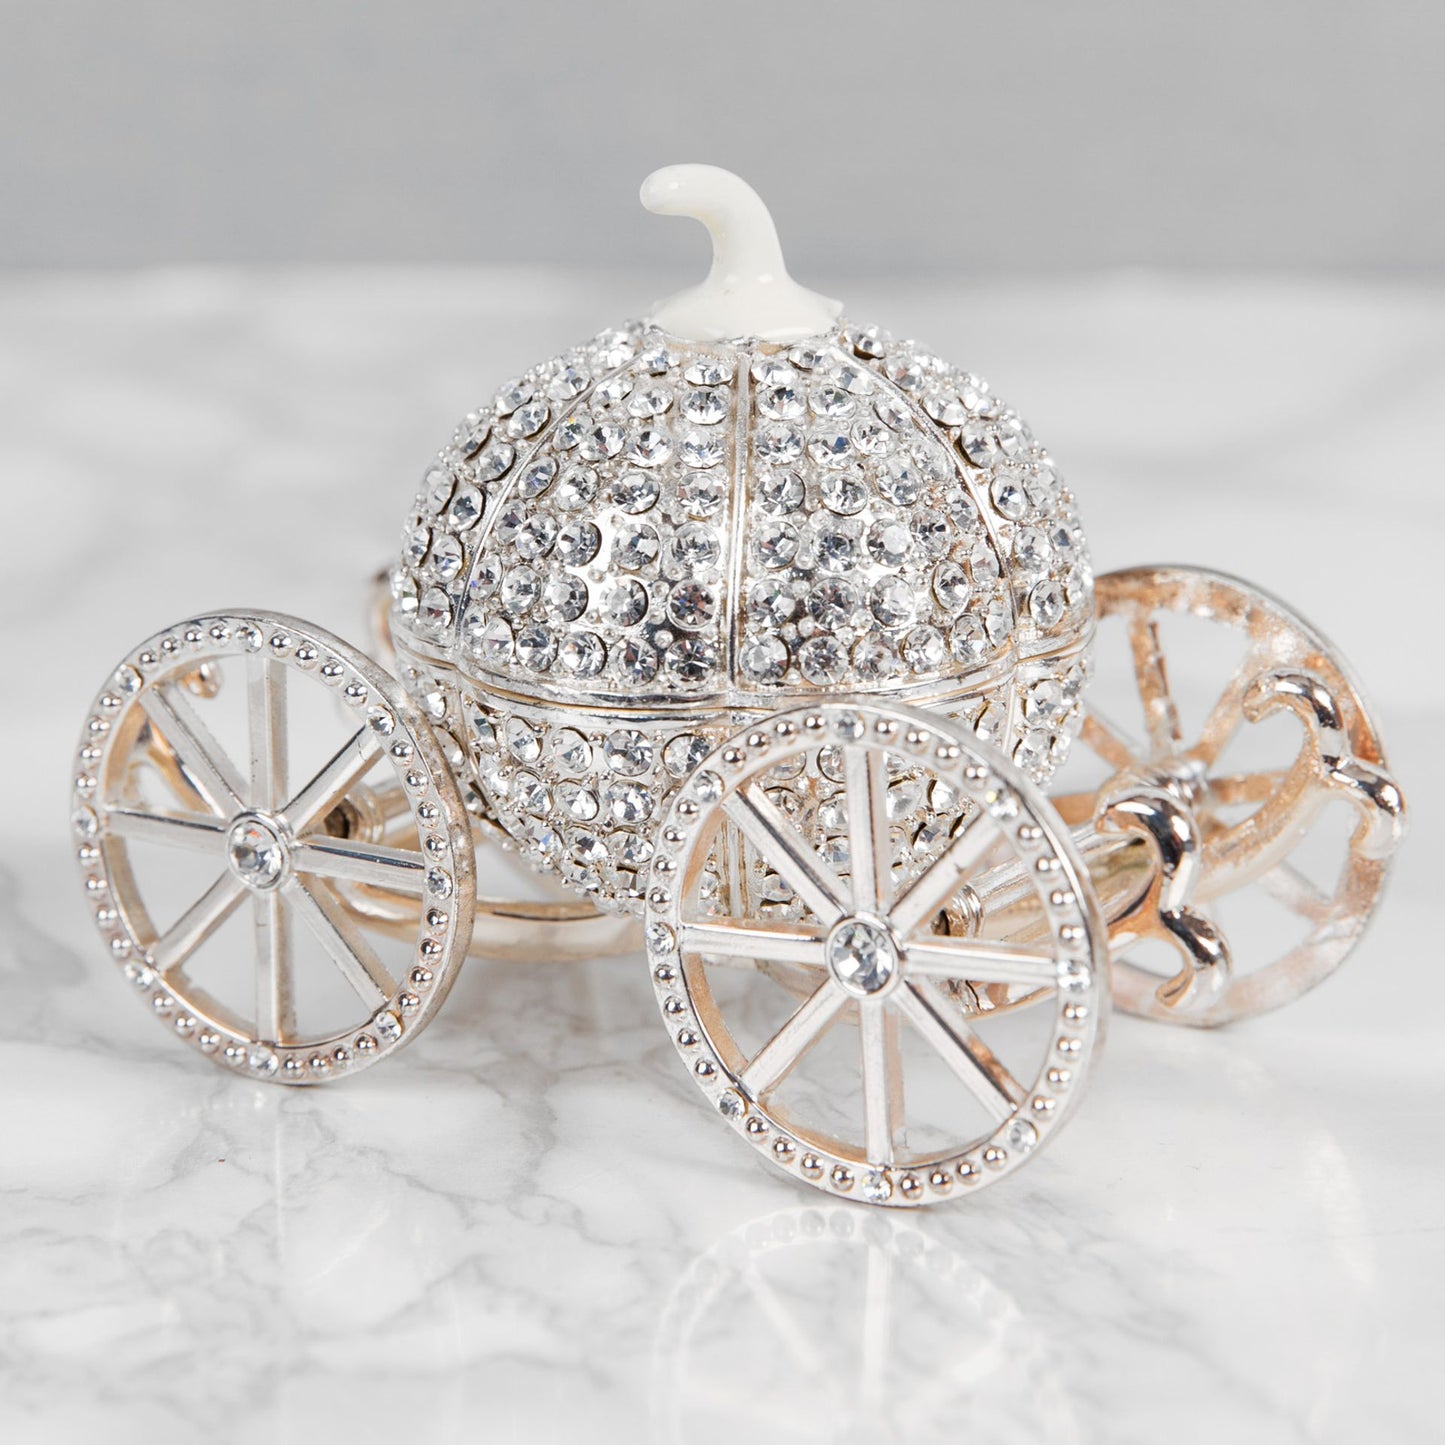 Carriage Trinket Box - 7.5 x 5 x 10 cm - Gift Box - Crystal